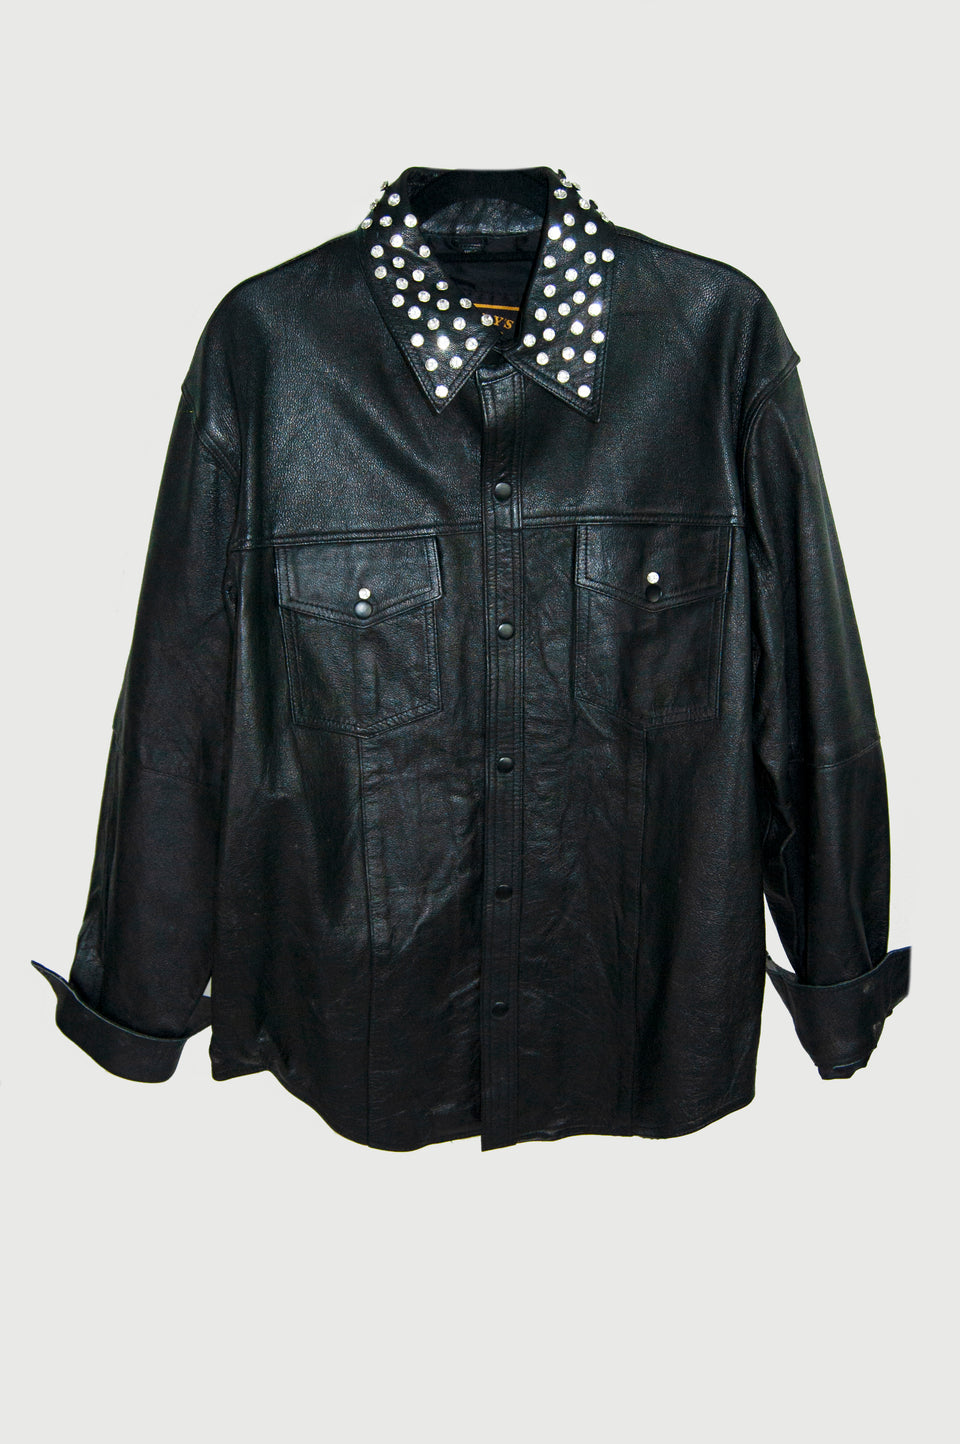 XL Leather Jacket with Rhinstones